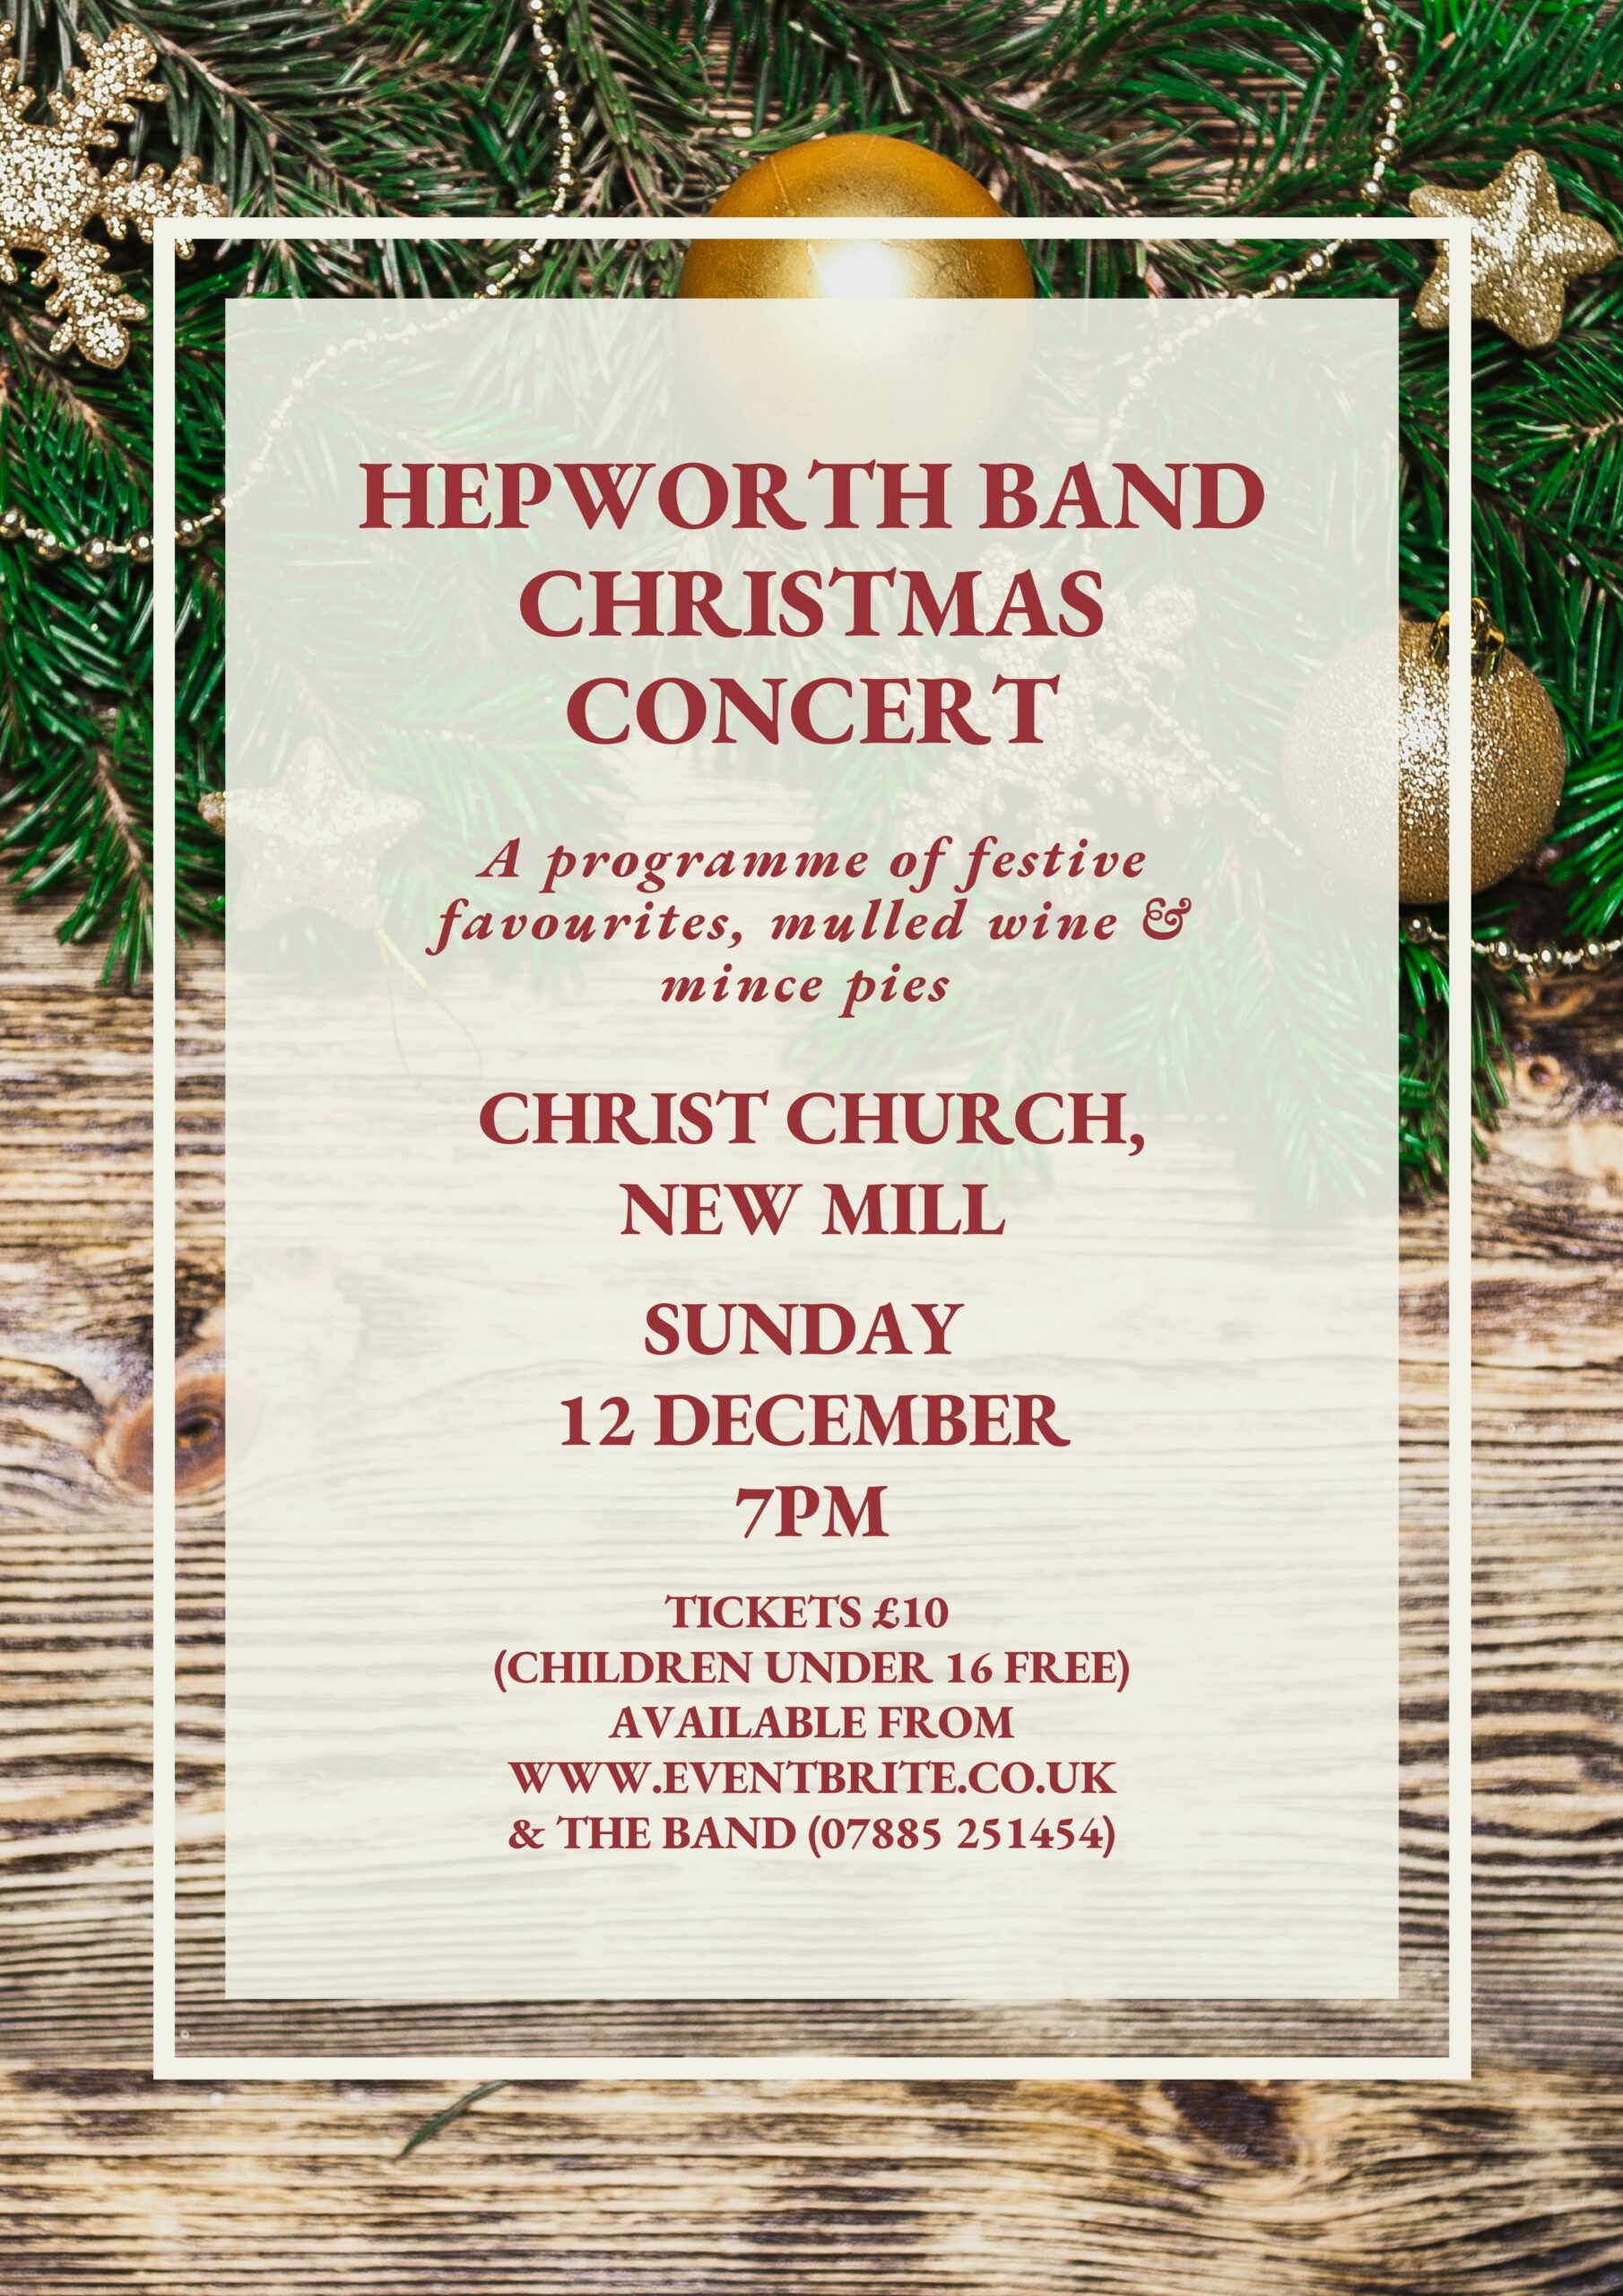 Hepworth Brass Band Christmas Concert